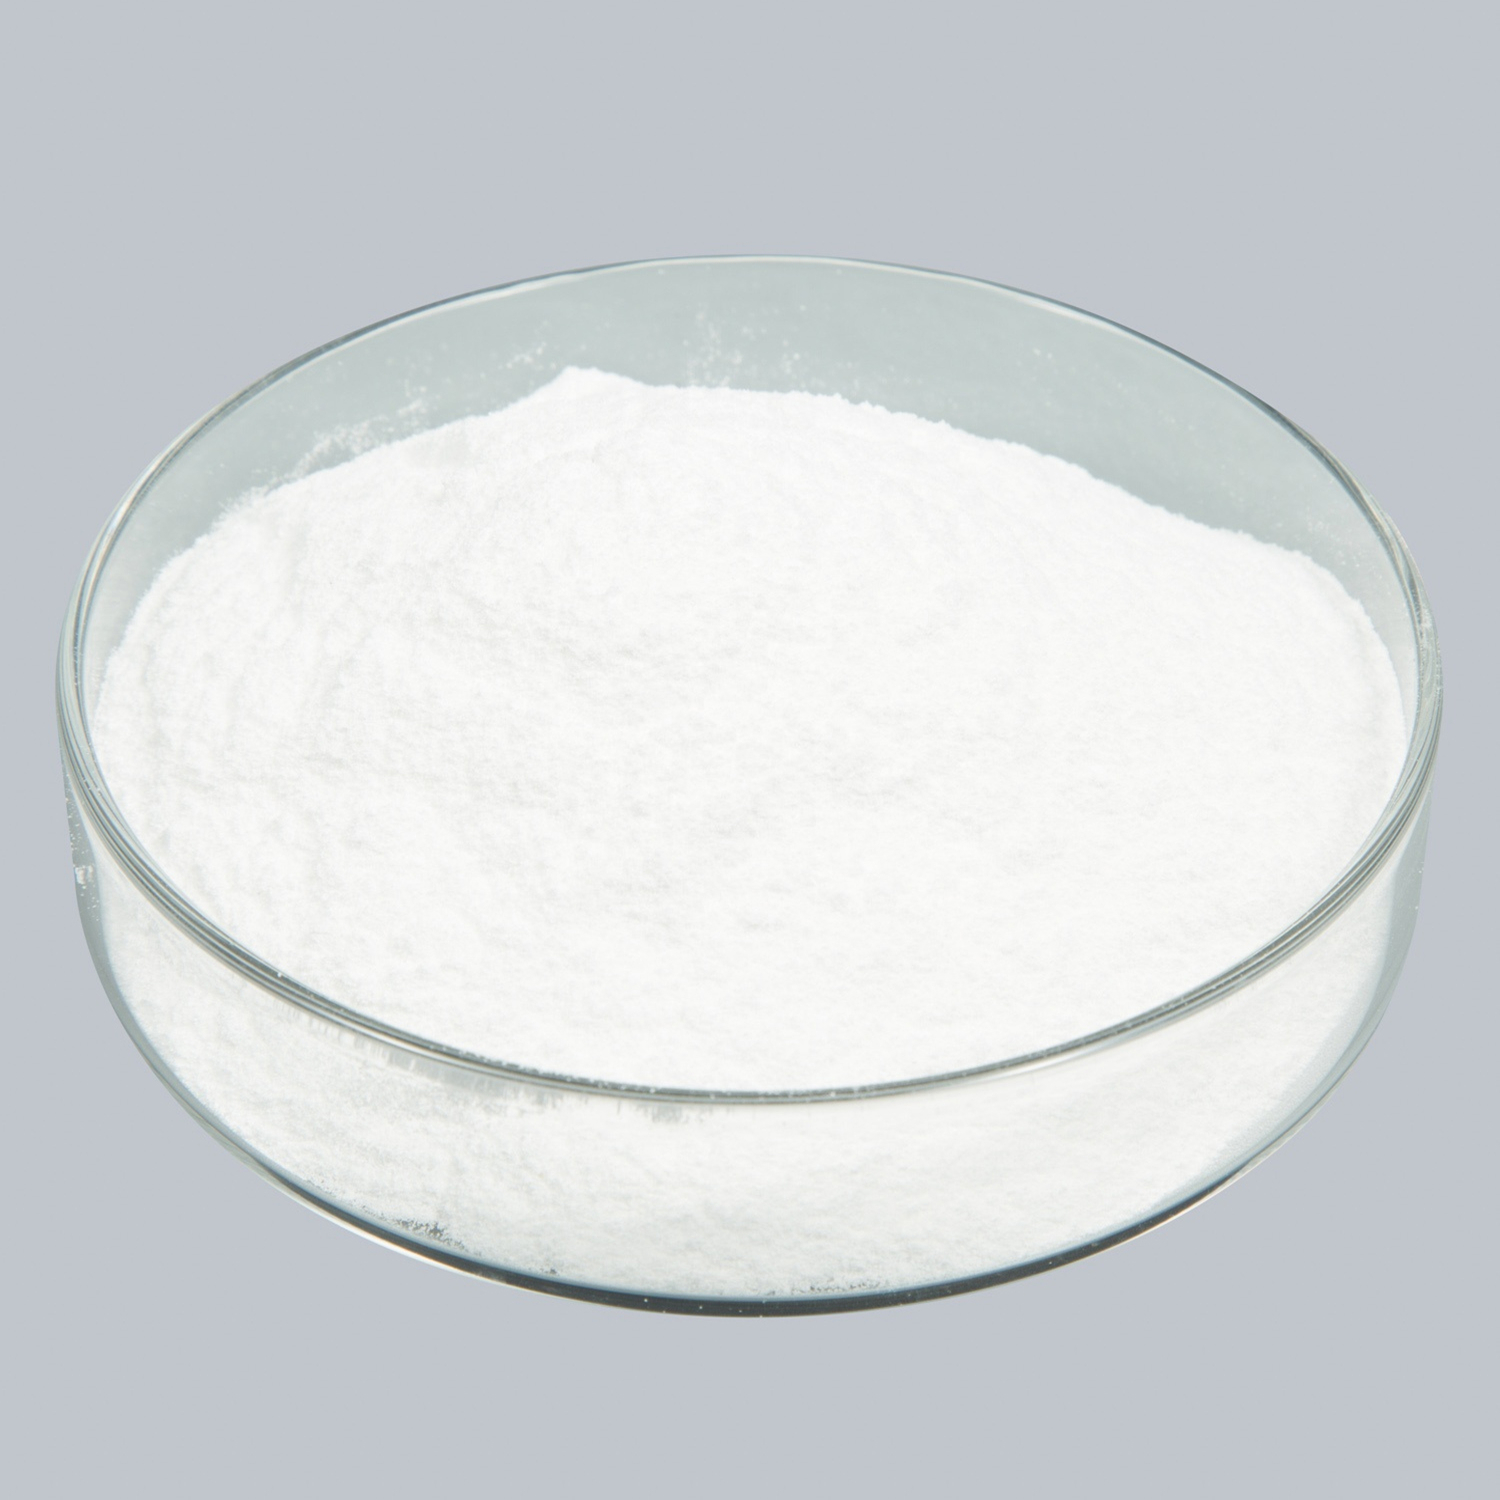 Zirconia powder for laboratory and school grinding and polishing jar